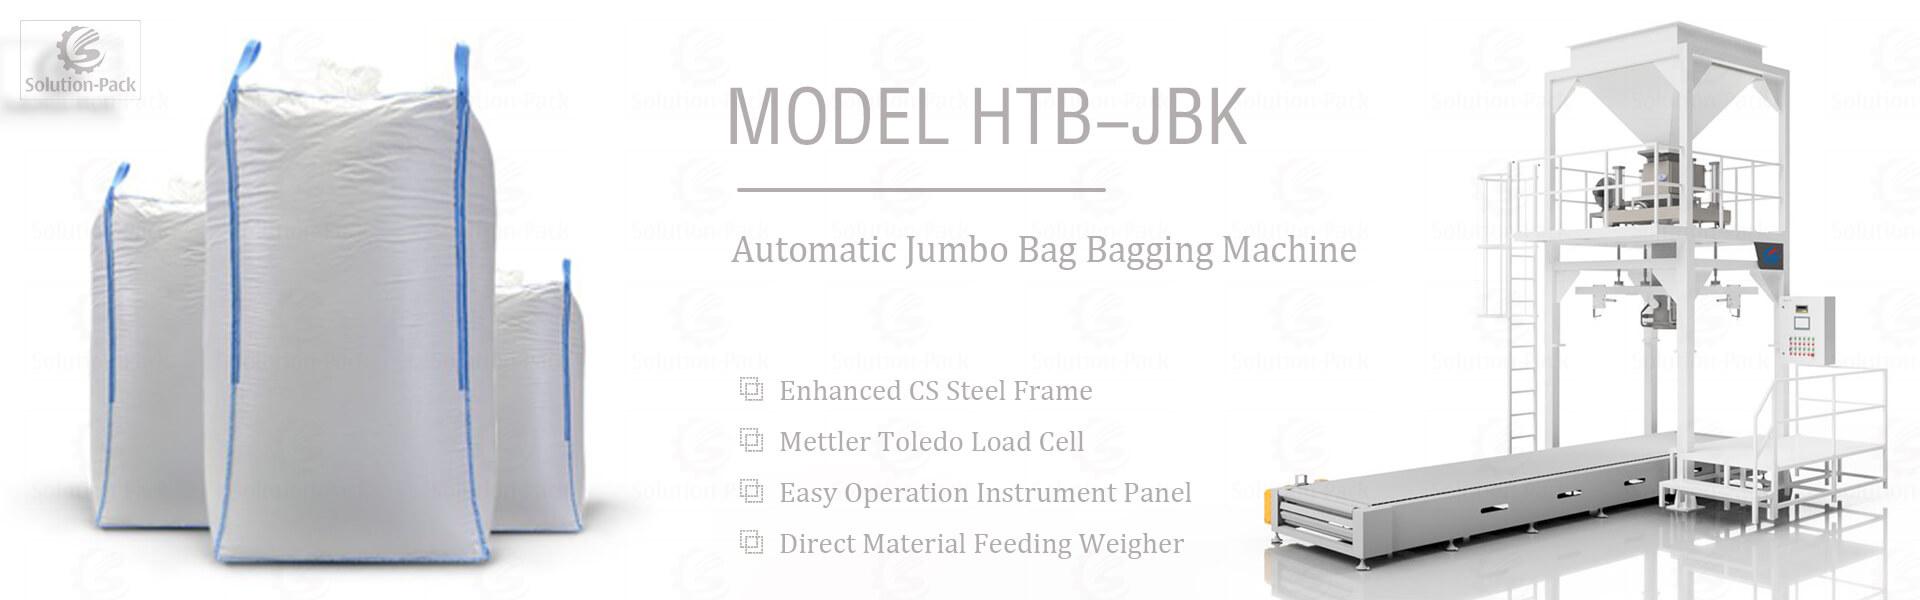 Solution-Pack | HTB-JBK Intelligent Granule Jumbo Bag Bagging Machine Featured Picture | Jumbo Bag Packing Machine | Ton Bag Packing Machine